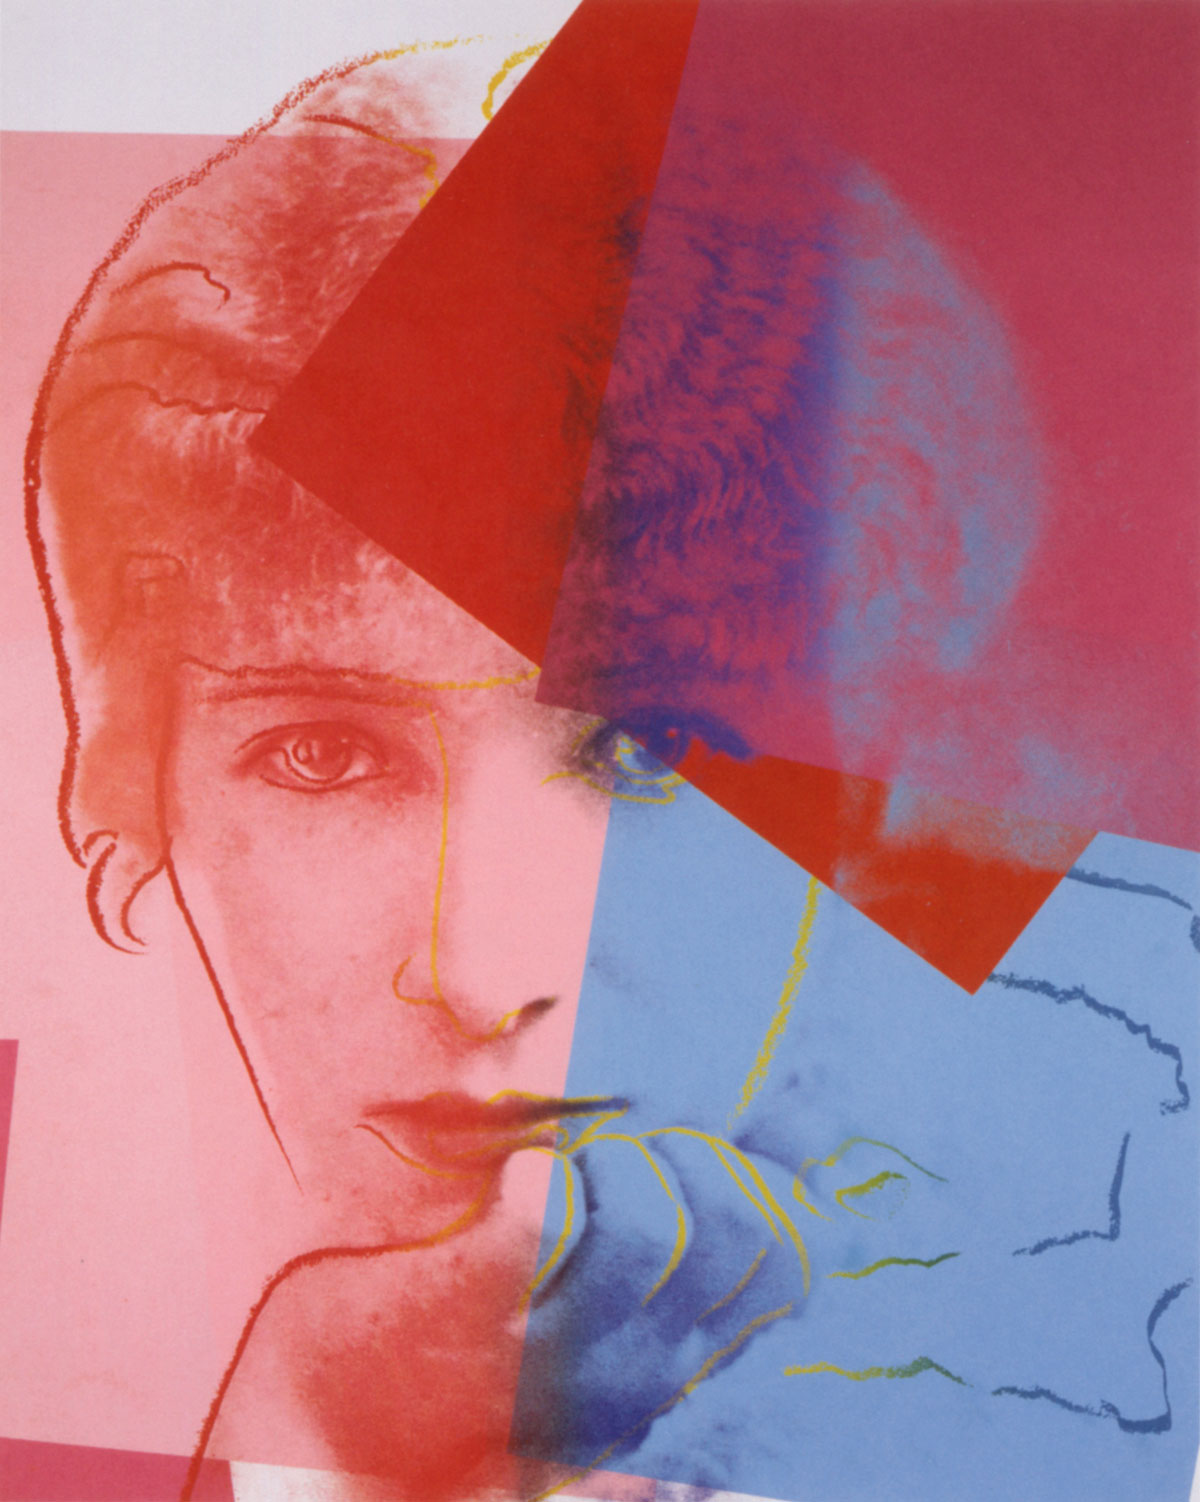 Andy Warhol | Ten Portraits of Jews of the Twentieth Century | Sarah Bernhardt 234 | 1980 | Image of Artists' work.